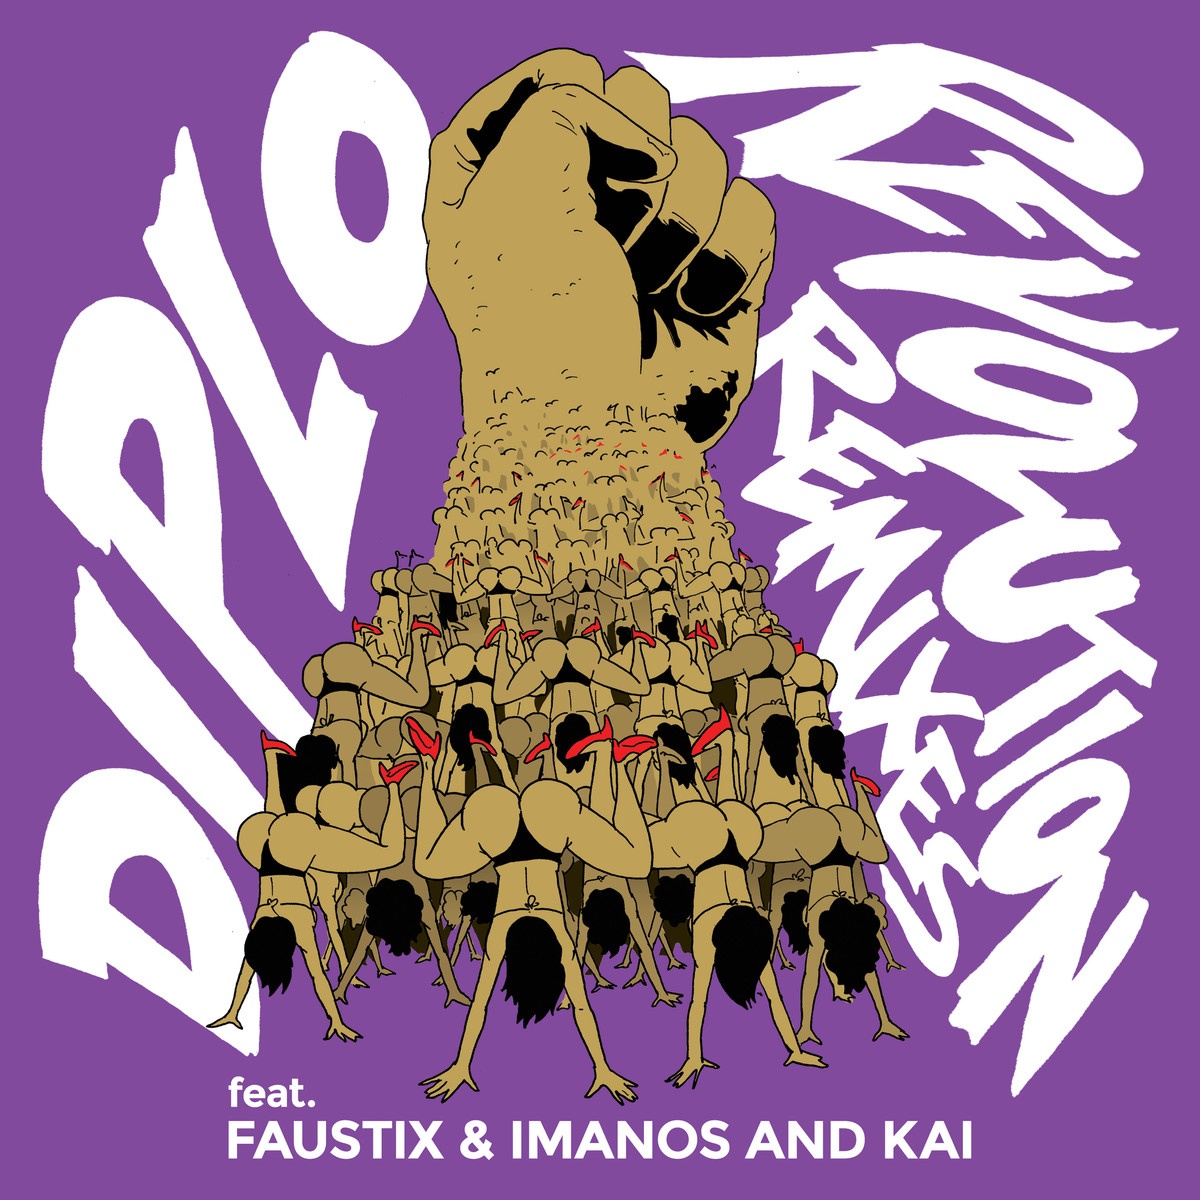 Revolution (feat. Faustix & Imanos and Kai)